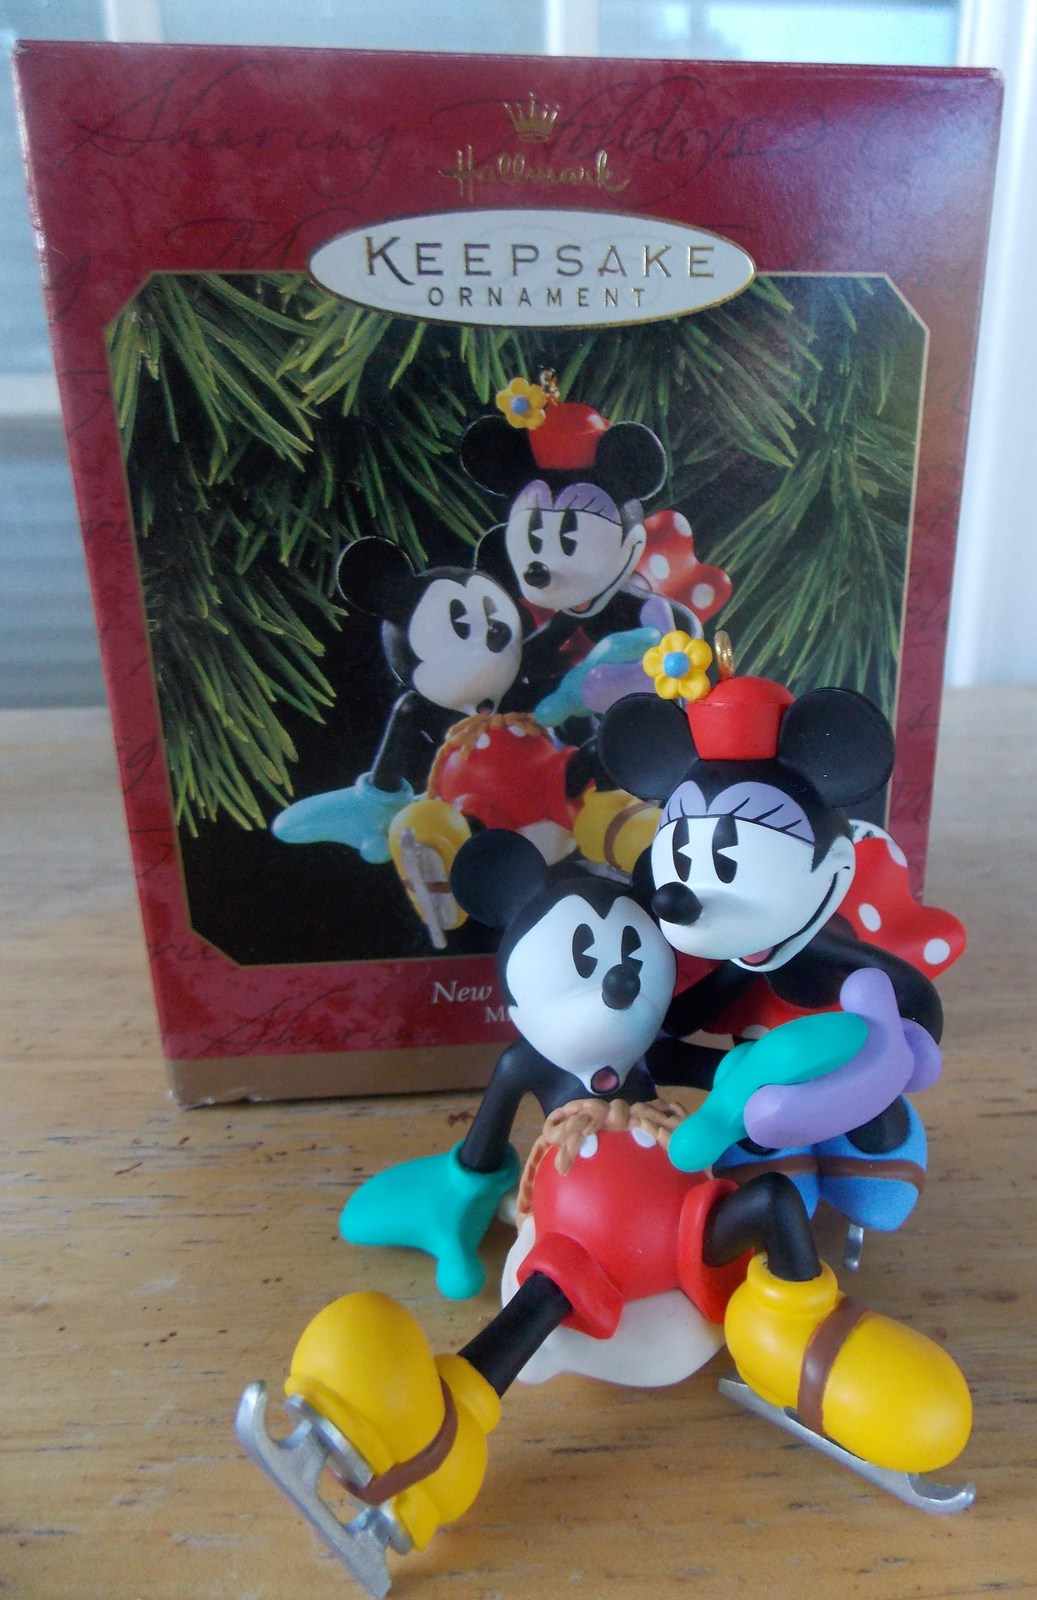 Primary image for 1997 Disney/Hallmark New Pair of Skates Mickey & Co. Ornament